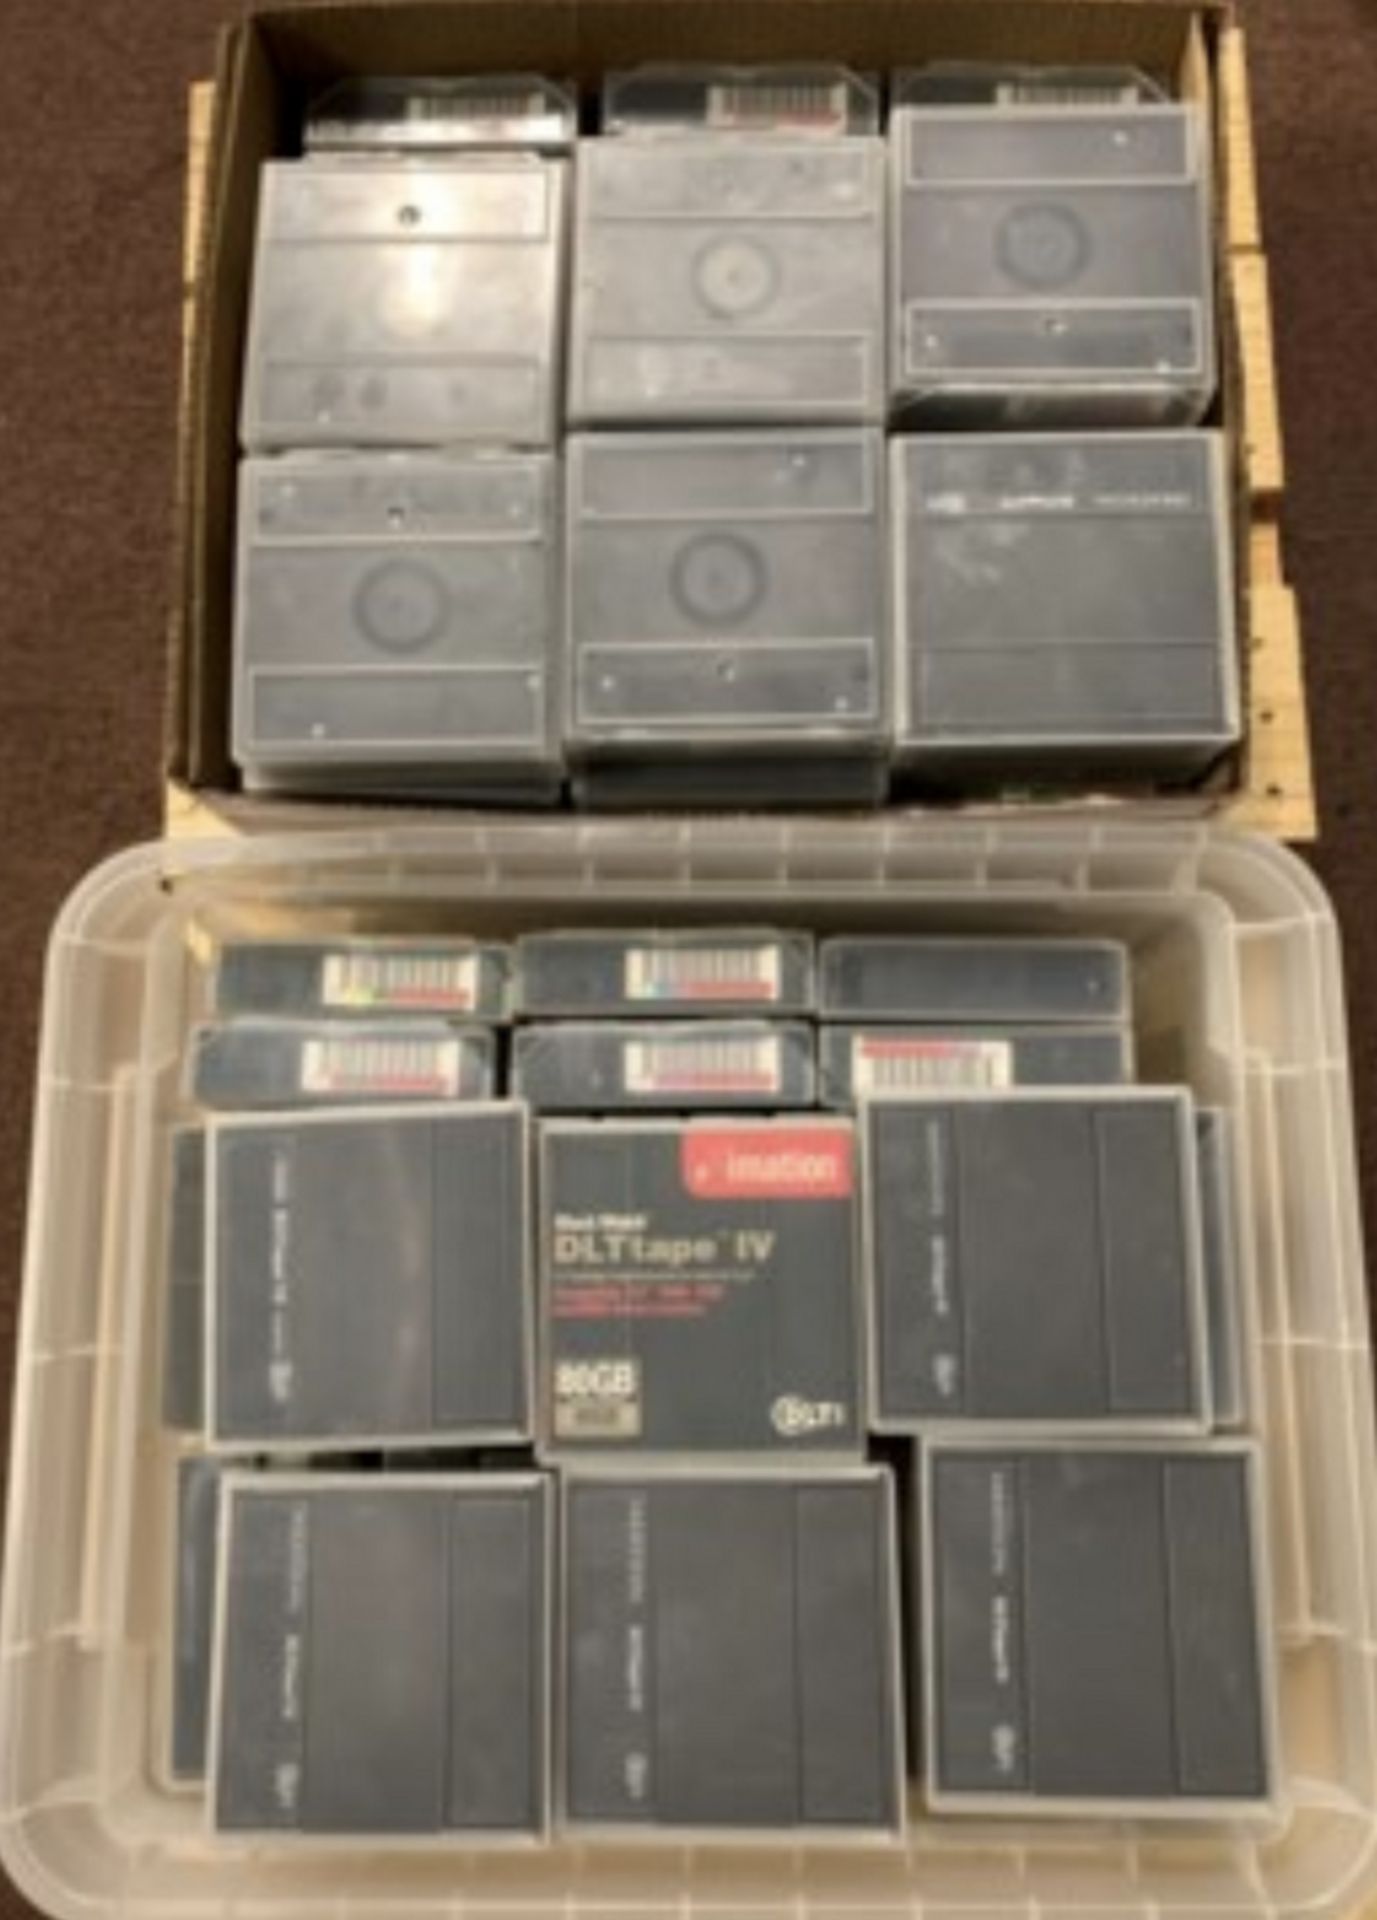 Large lot of Imation DLT Tape IV 80GB Cartridges - Image 3 of 6